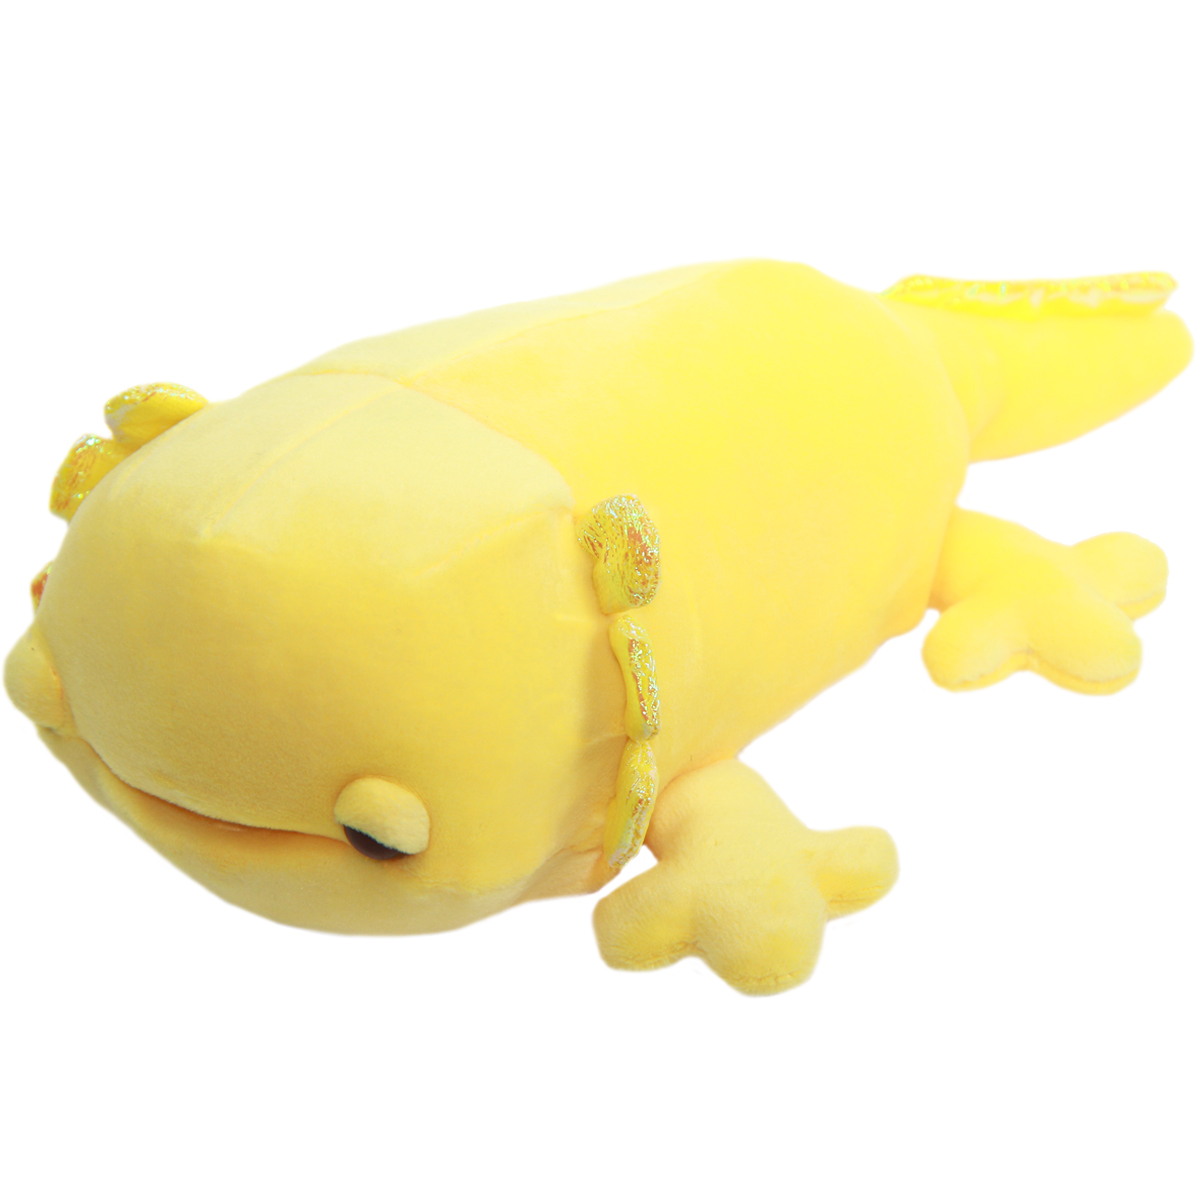 Aquarium Collection Axolotl Plush Toy Super Soft Mochi Stuffed Animal Yellow Uparupa